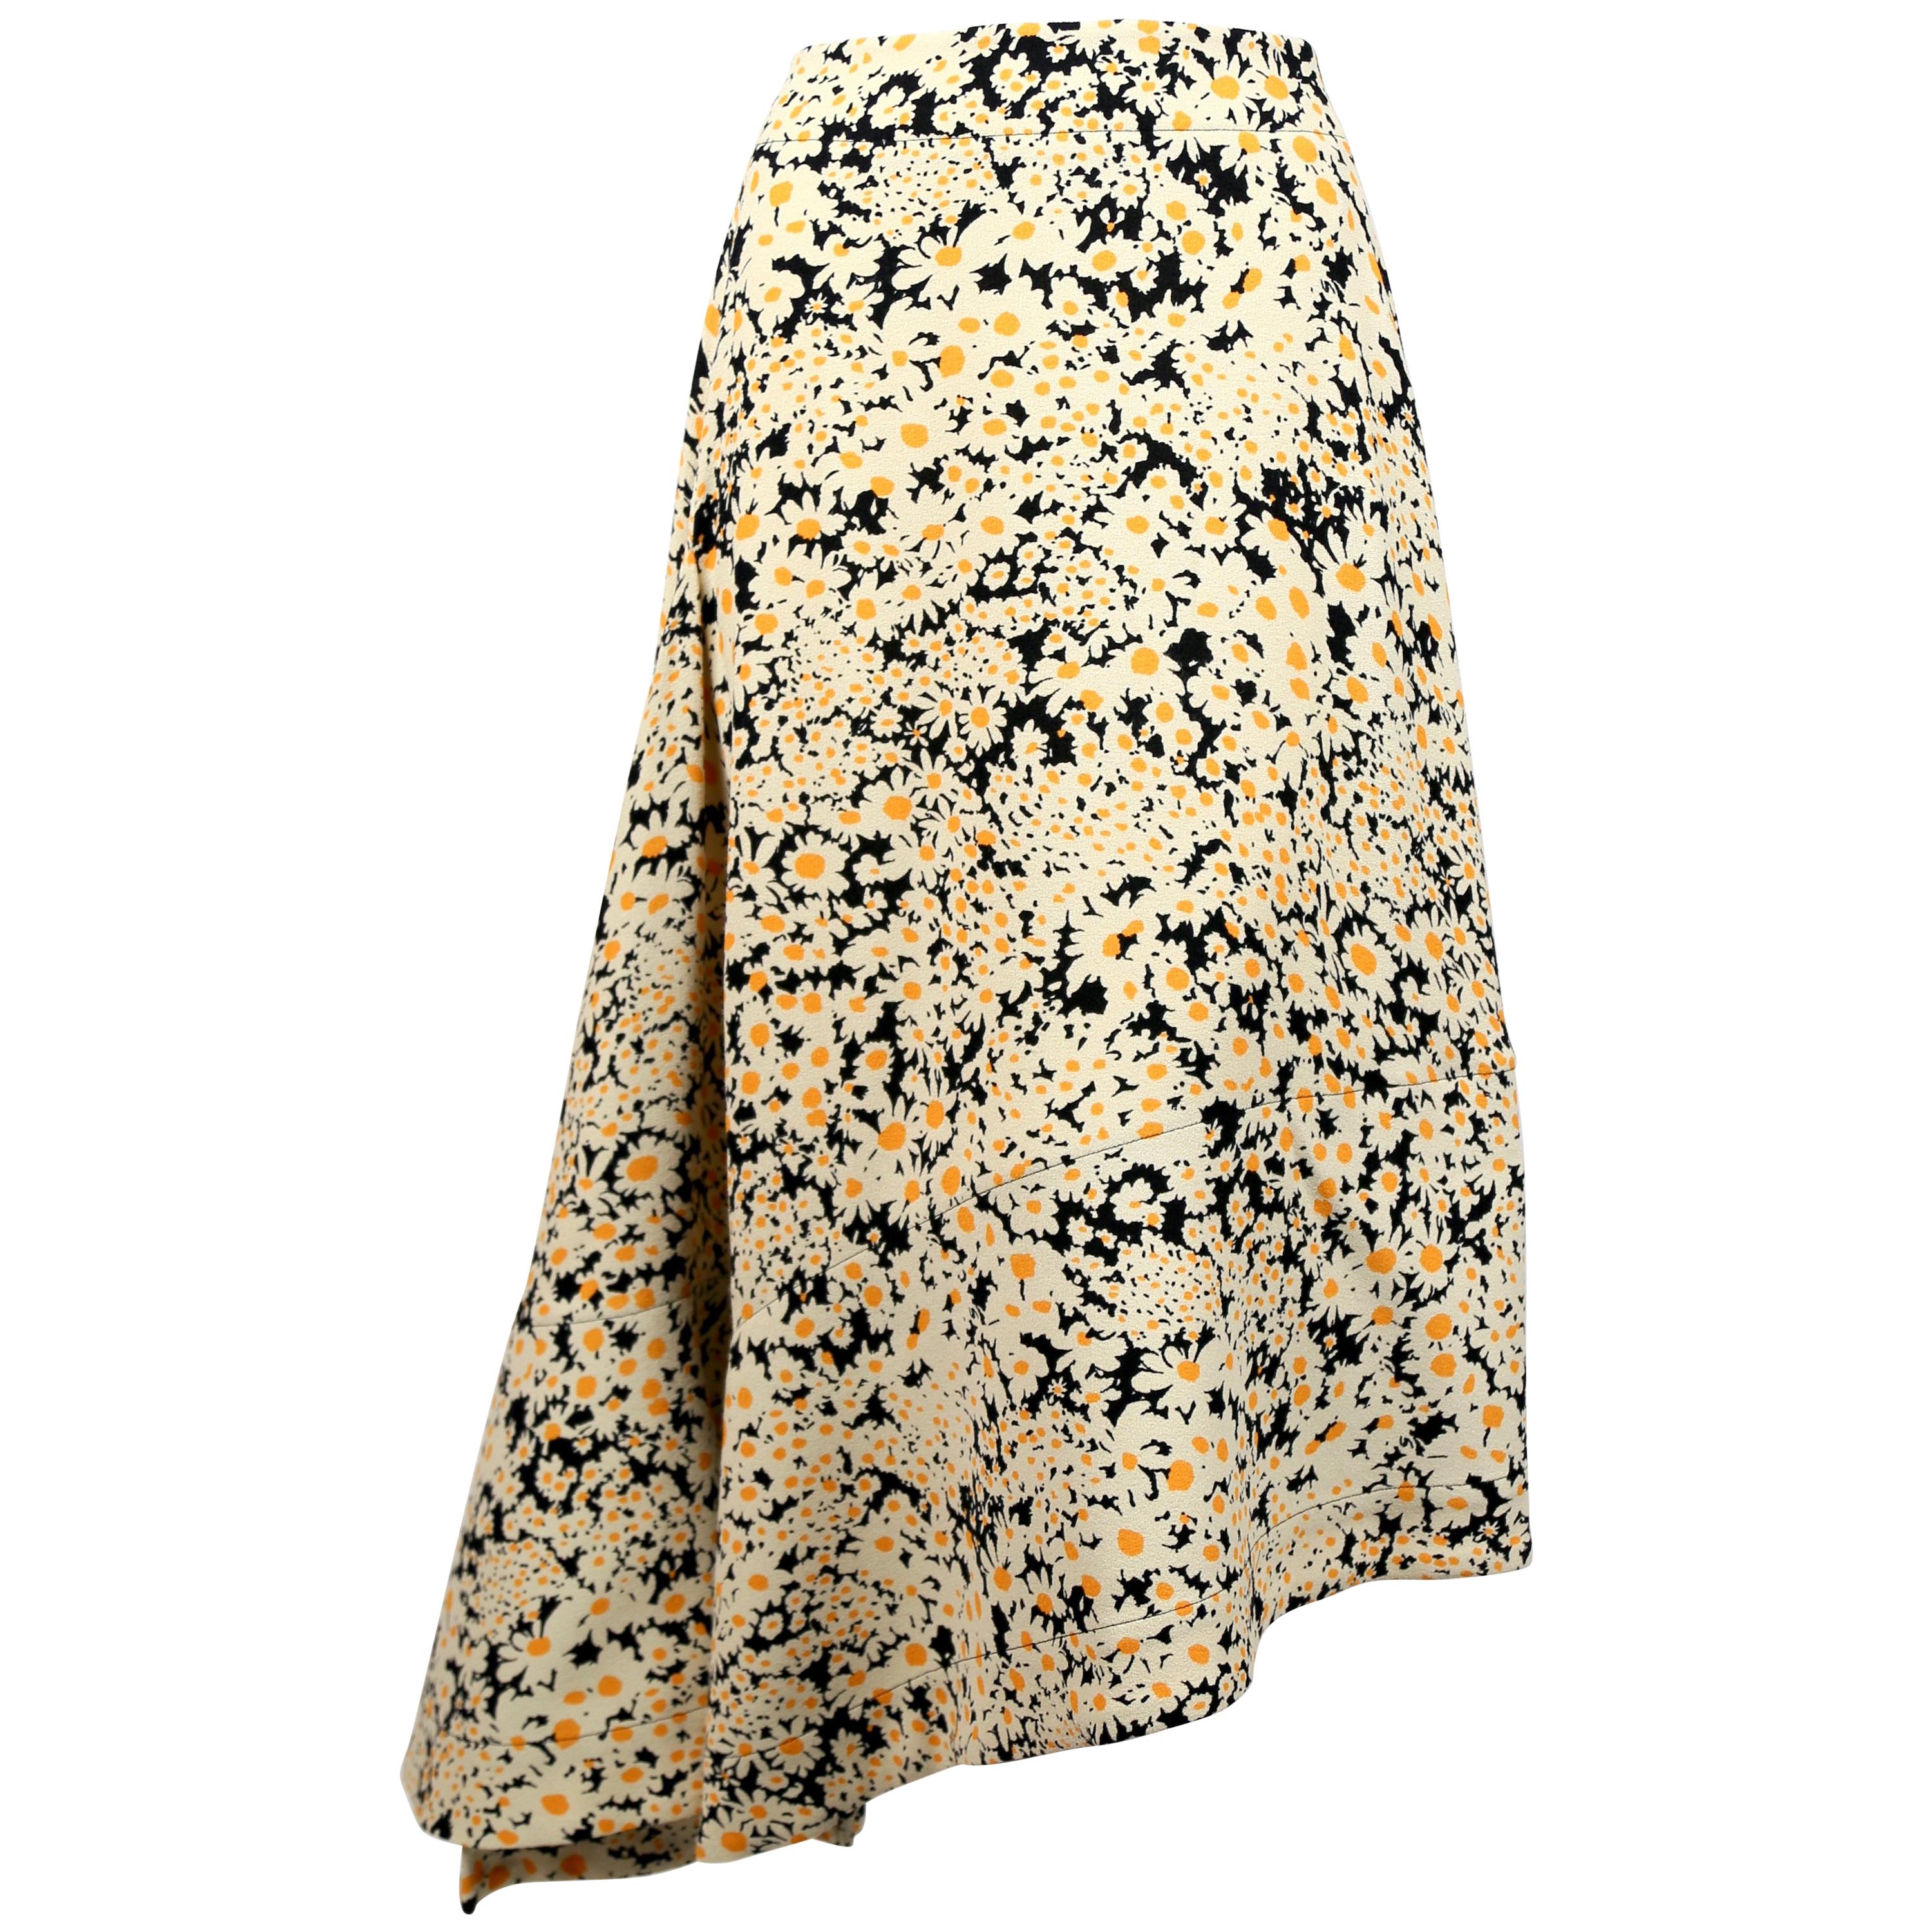 Celine by Phoebe Philo asymmetrical floral runway skirt